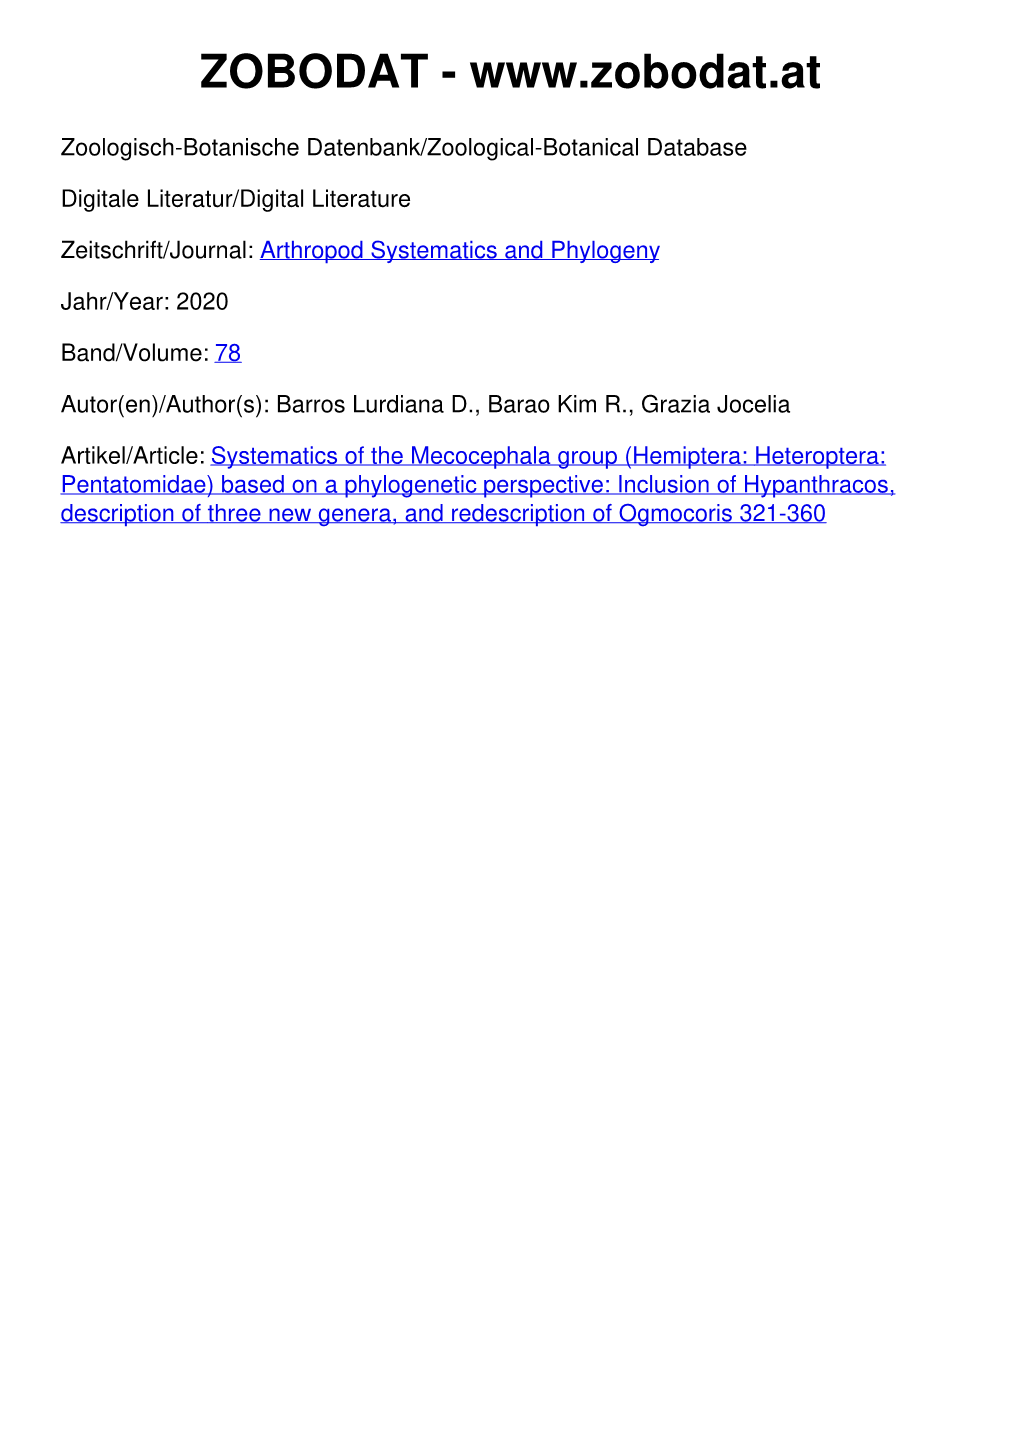 Systematics of the Mecocephala Group (Hemiptera